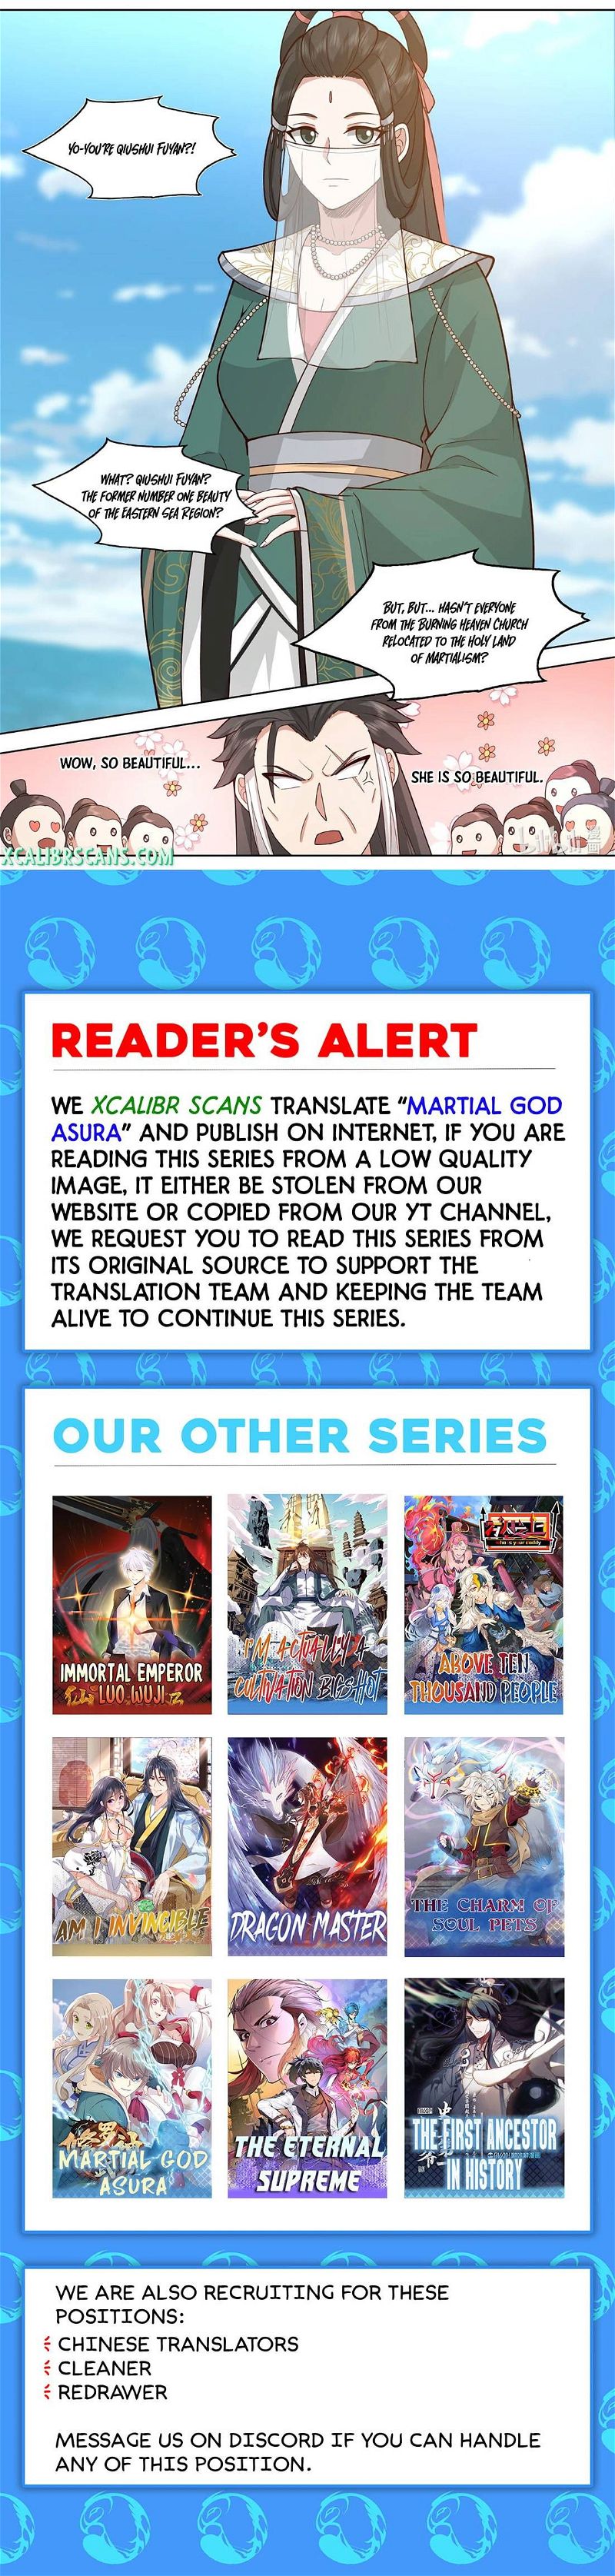 Martial God Asura Chapter 570 page 10